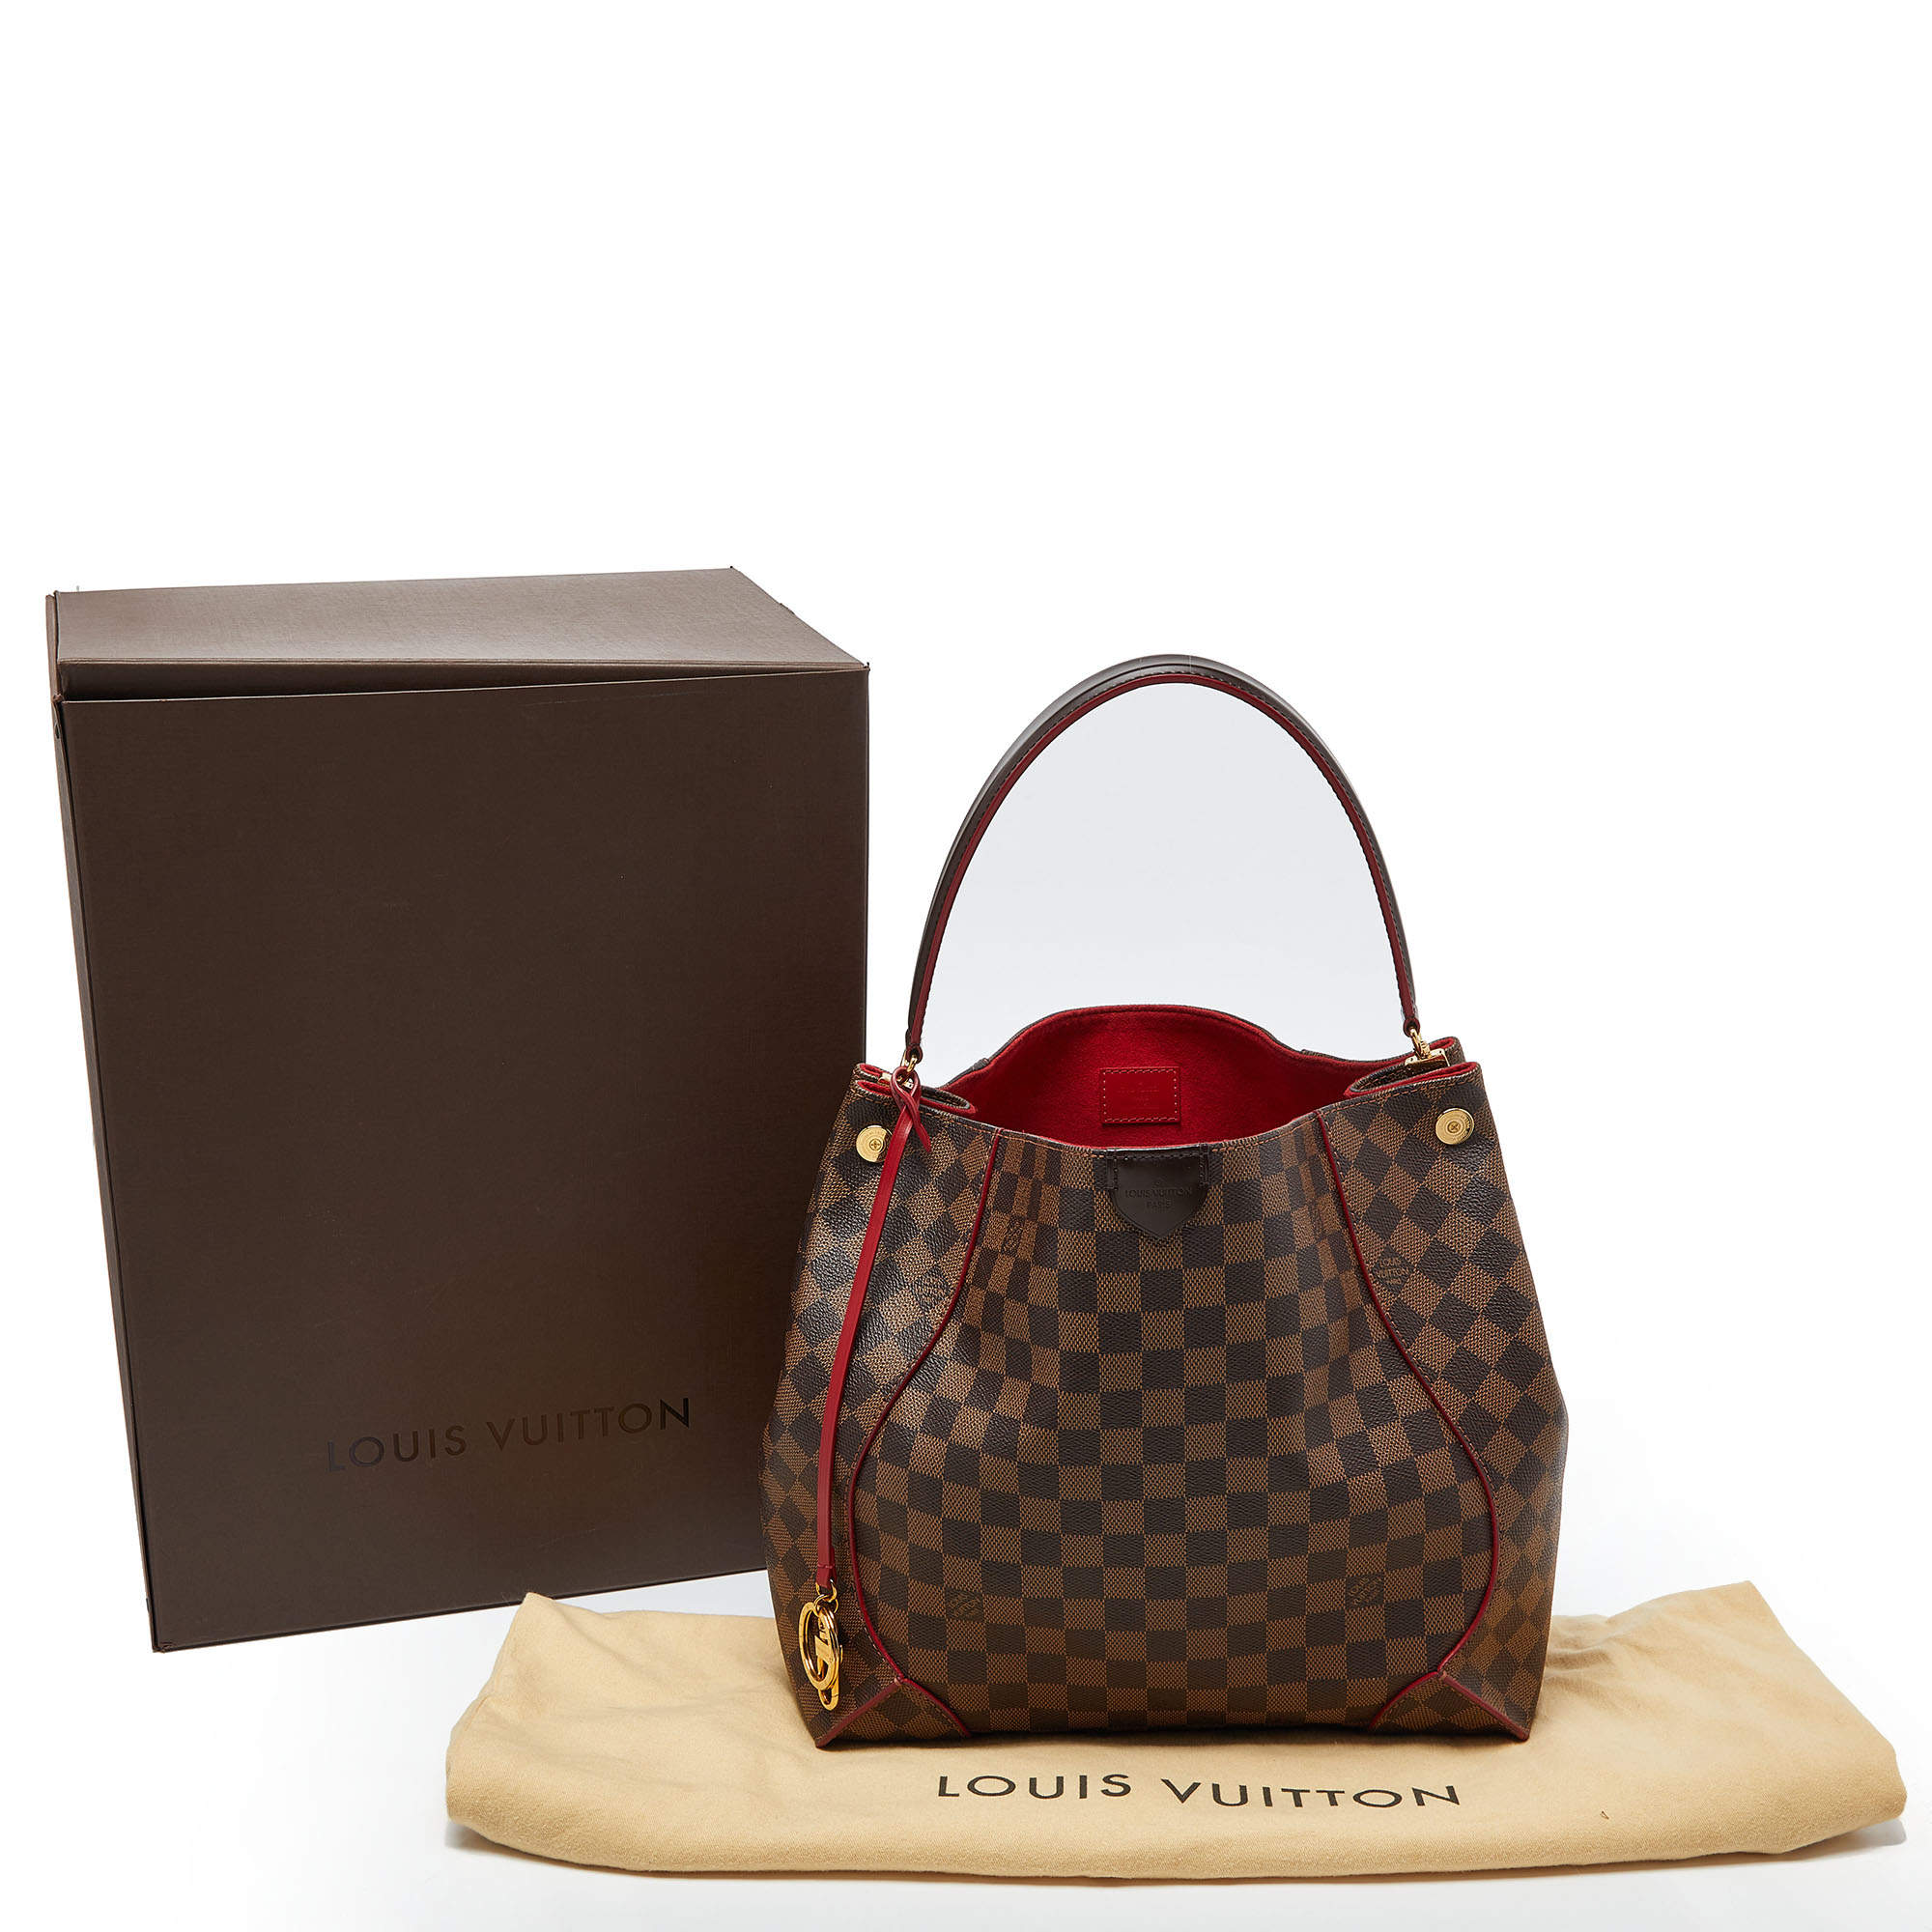 We have bought Louis Vuitton Caissa Hobo